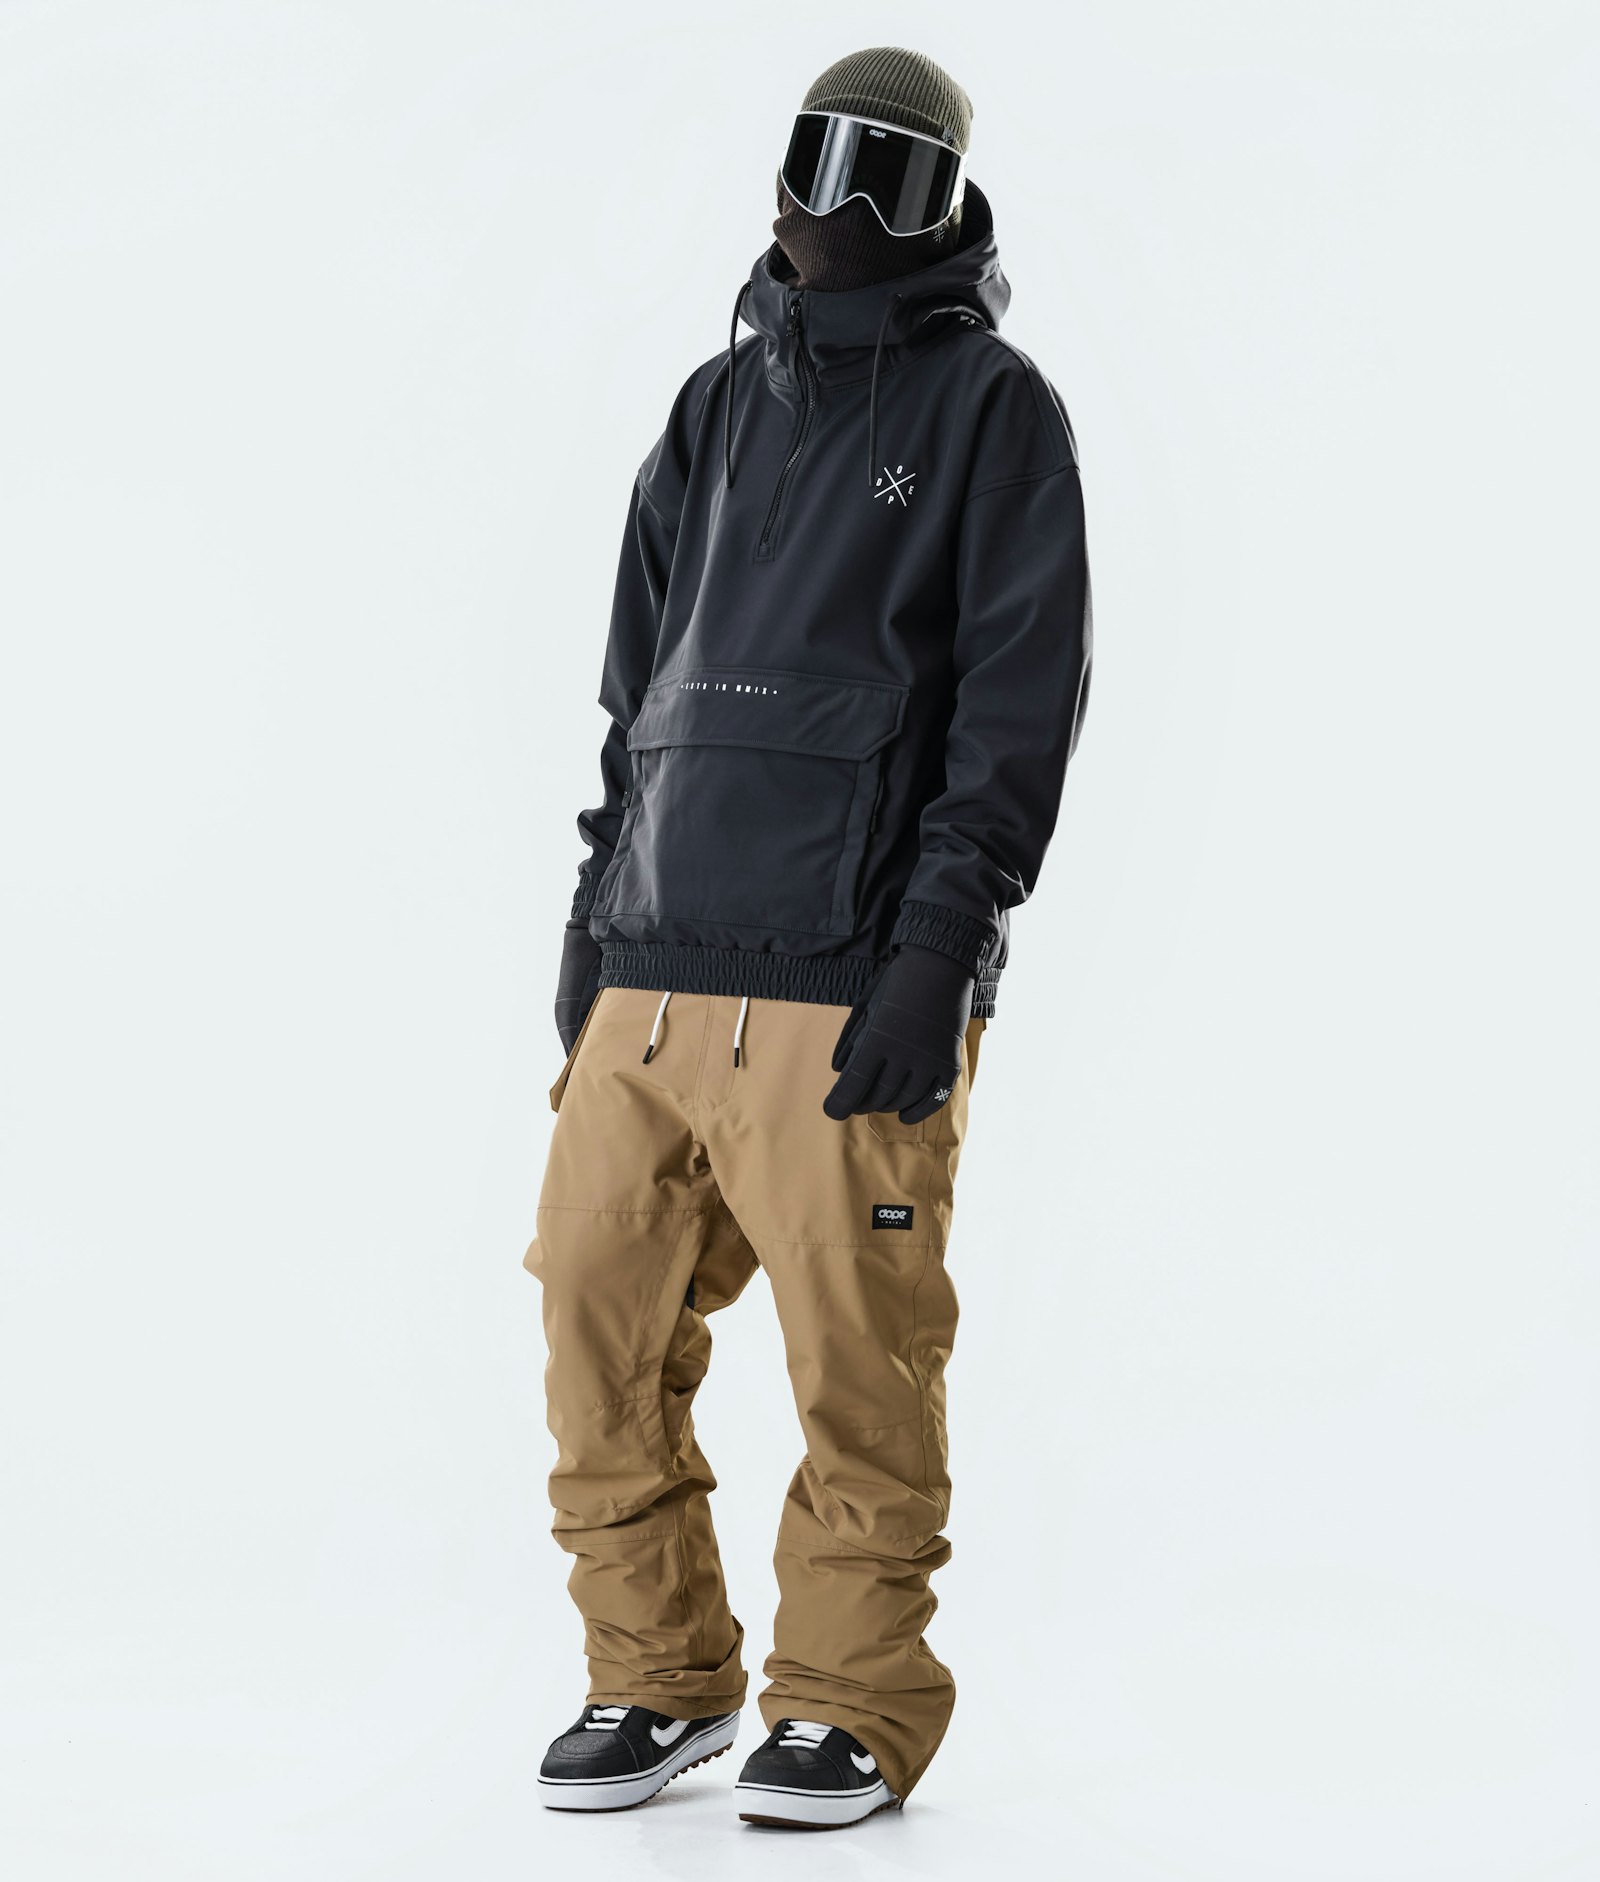 Cyclone 2020 Veste Snowboard Homme Black